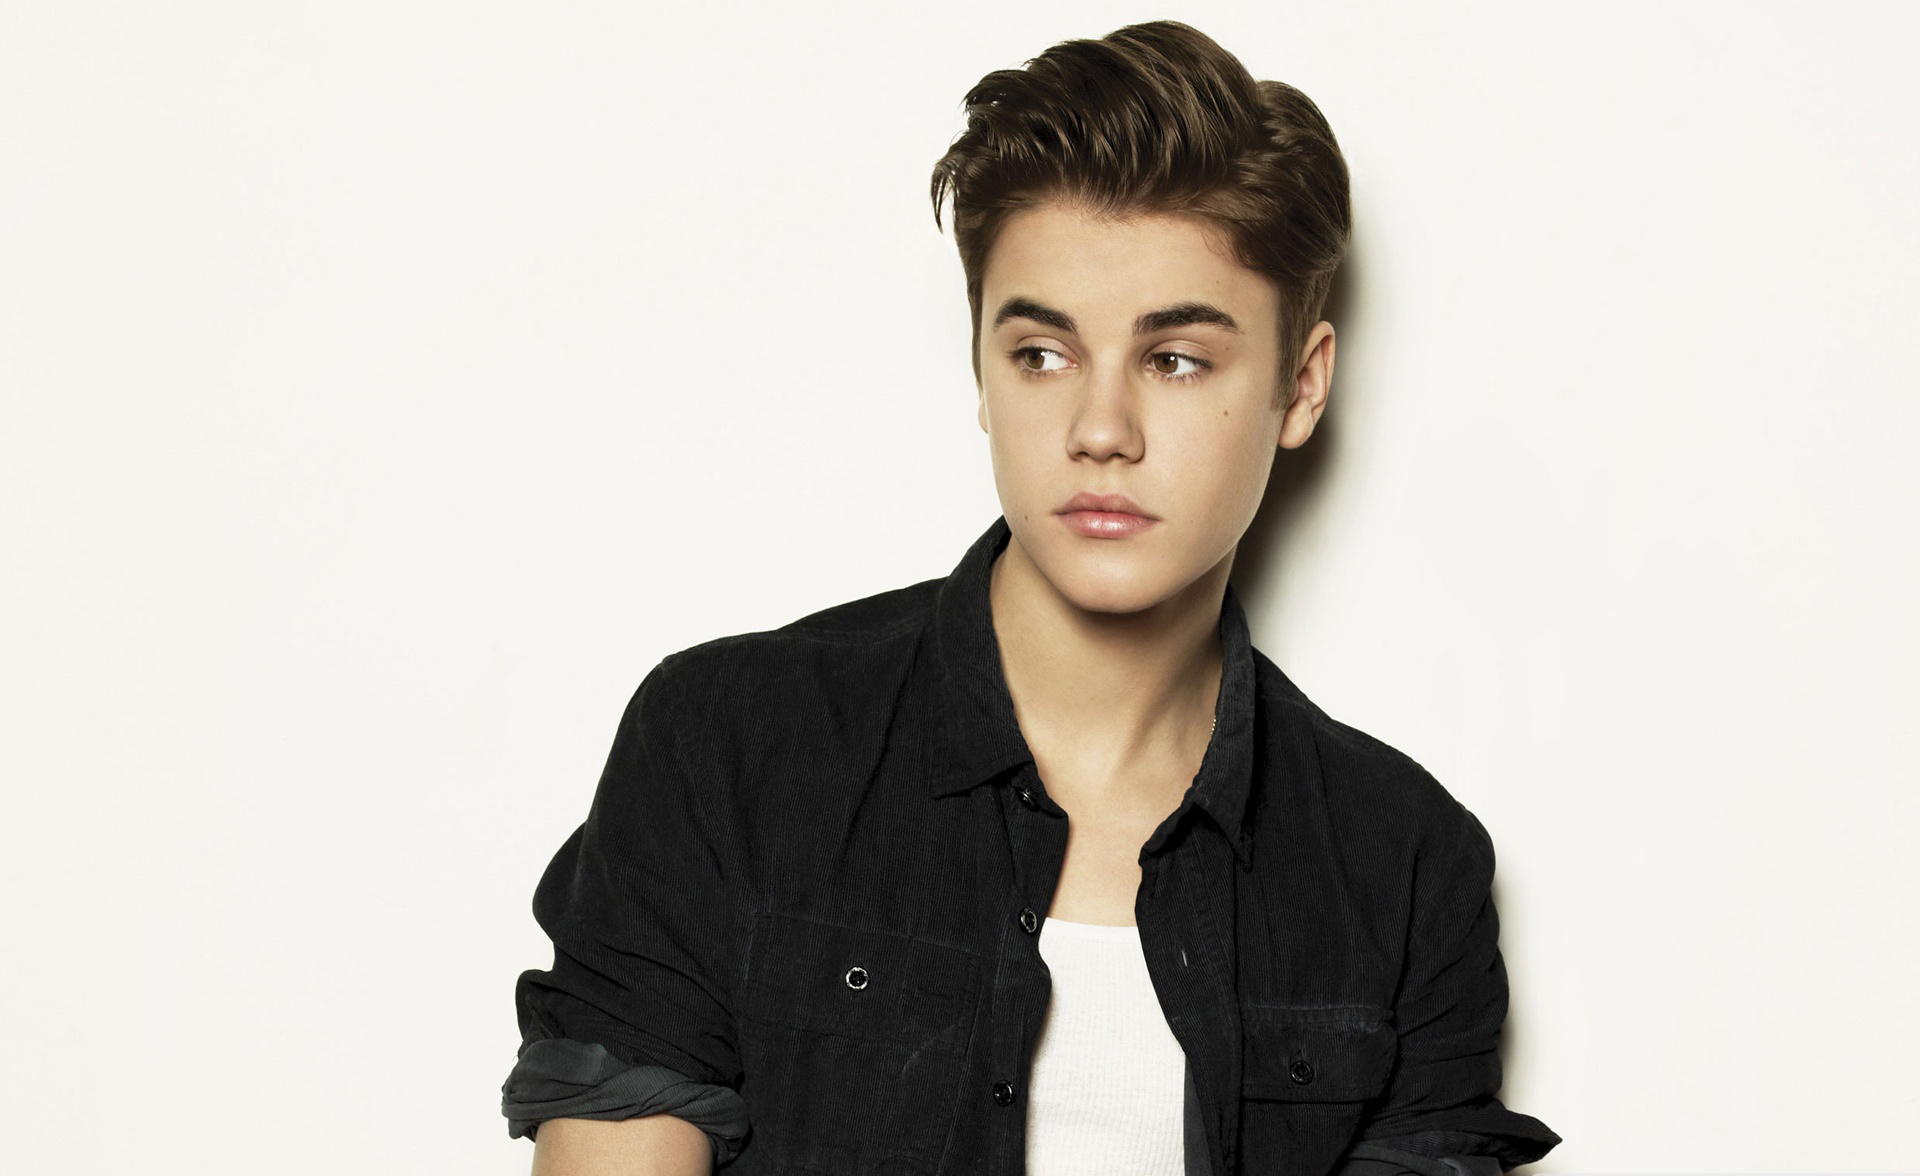 Justin Bieber Latest Photos Wallpaper, HD Celebrities 4K Wallpapers ...